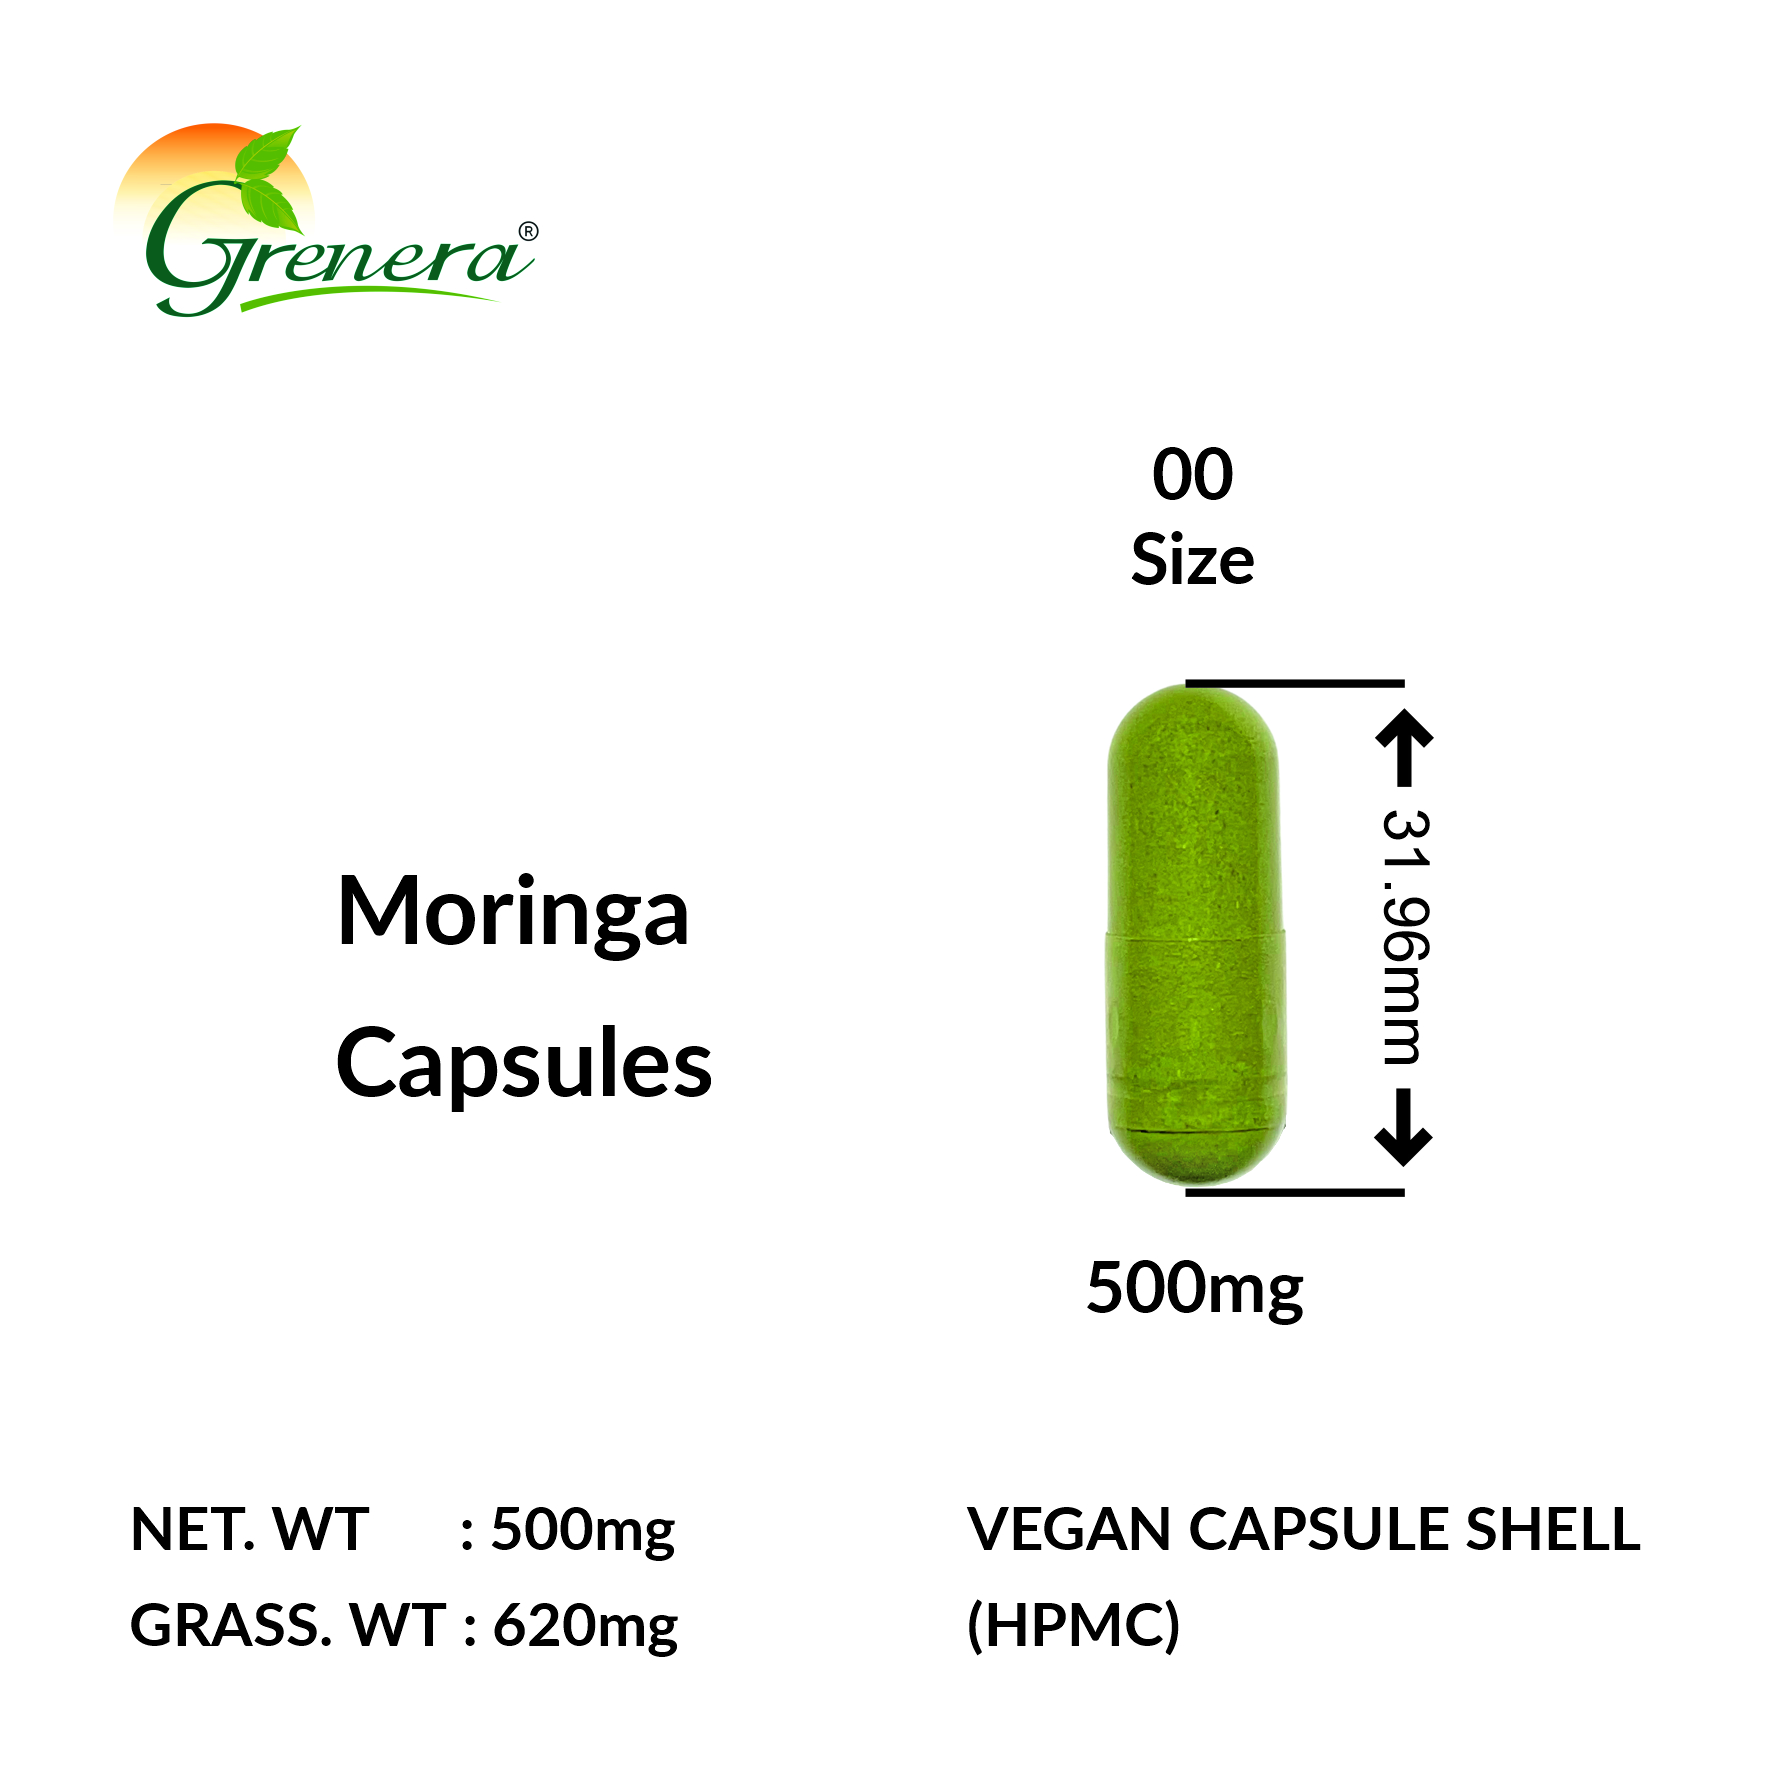 Moringa capsules 00 size